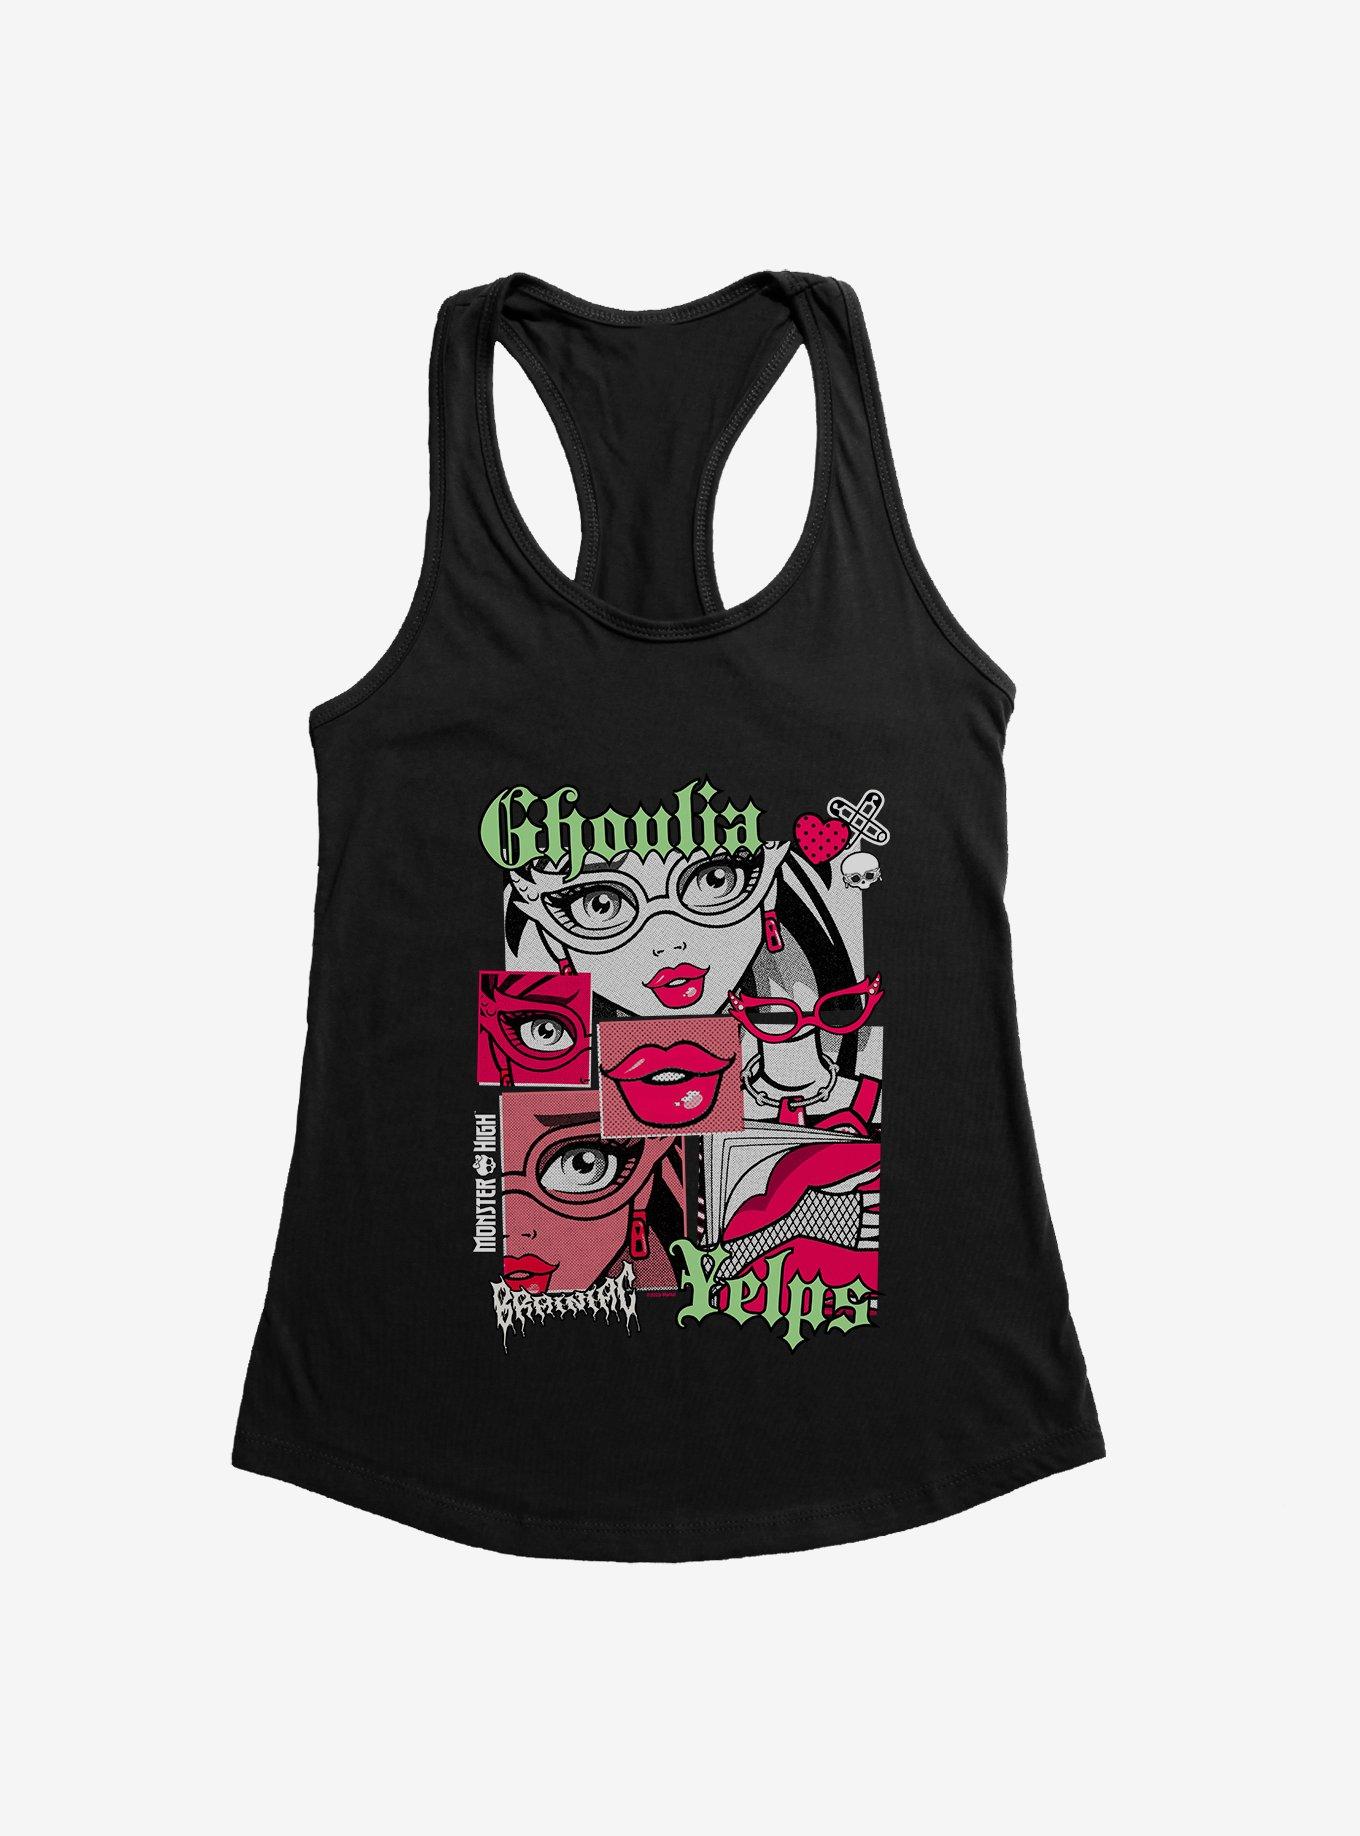 Monster High Ghoulia Yelps Brainiac Girls Tank, BLACK, hi-res